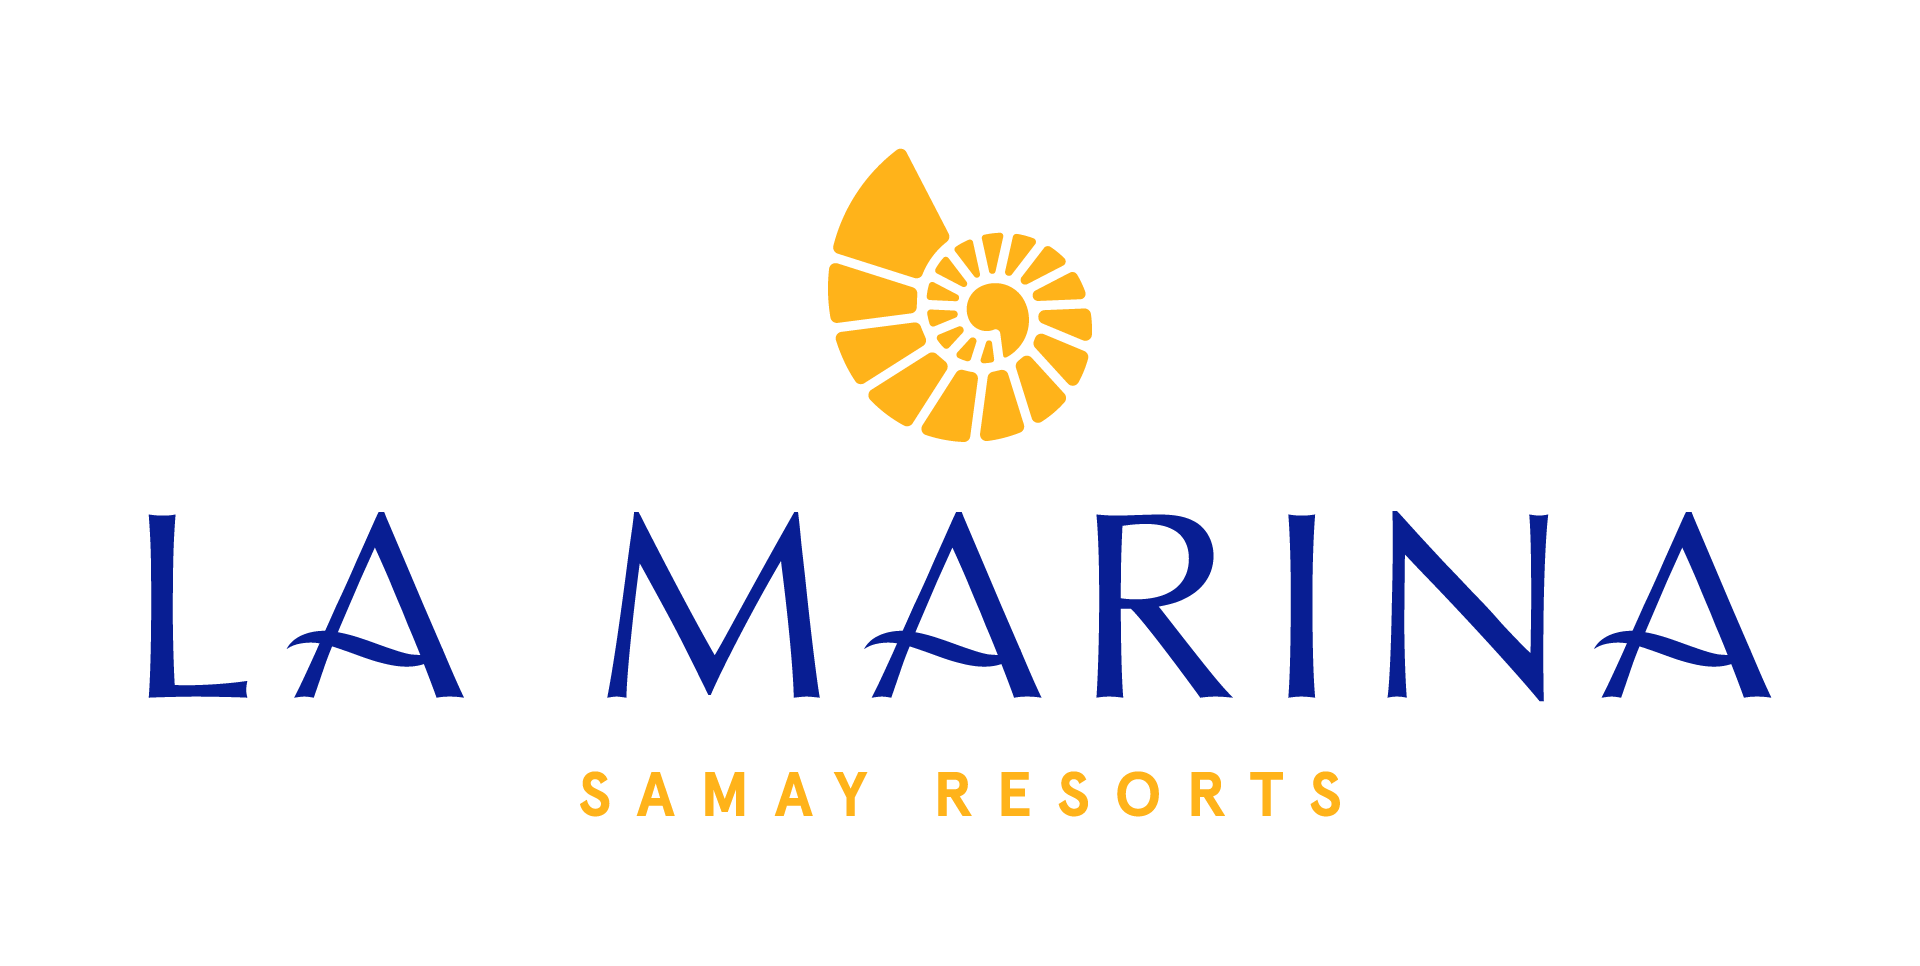 La Marina Resort by Samay